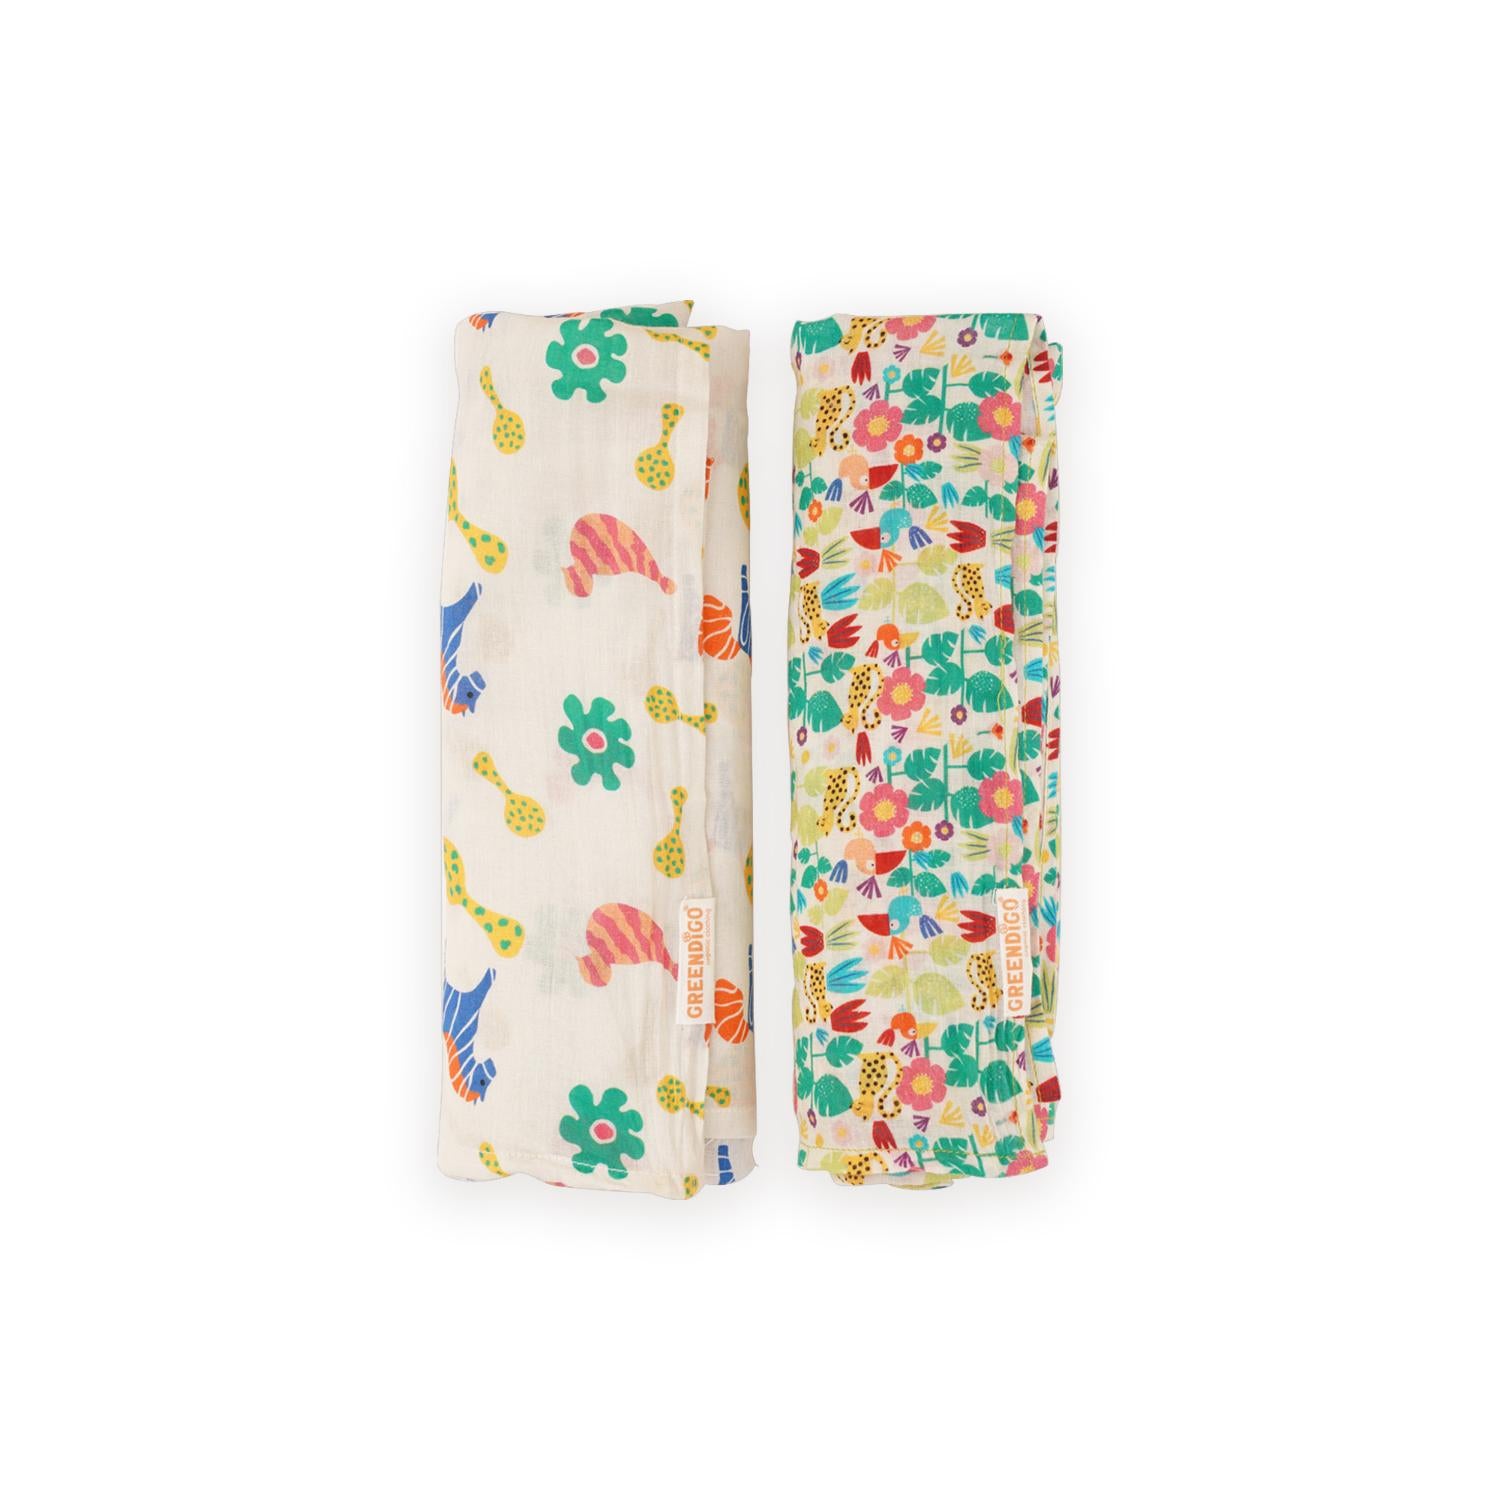 Greendigo Cotton Muslin Swaddle Wrap for New Born 100 x 100 cm, (Pack of 2) - Multicolor